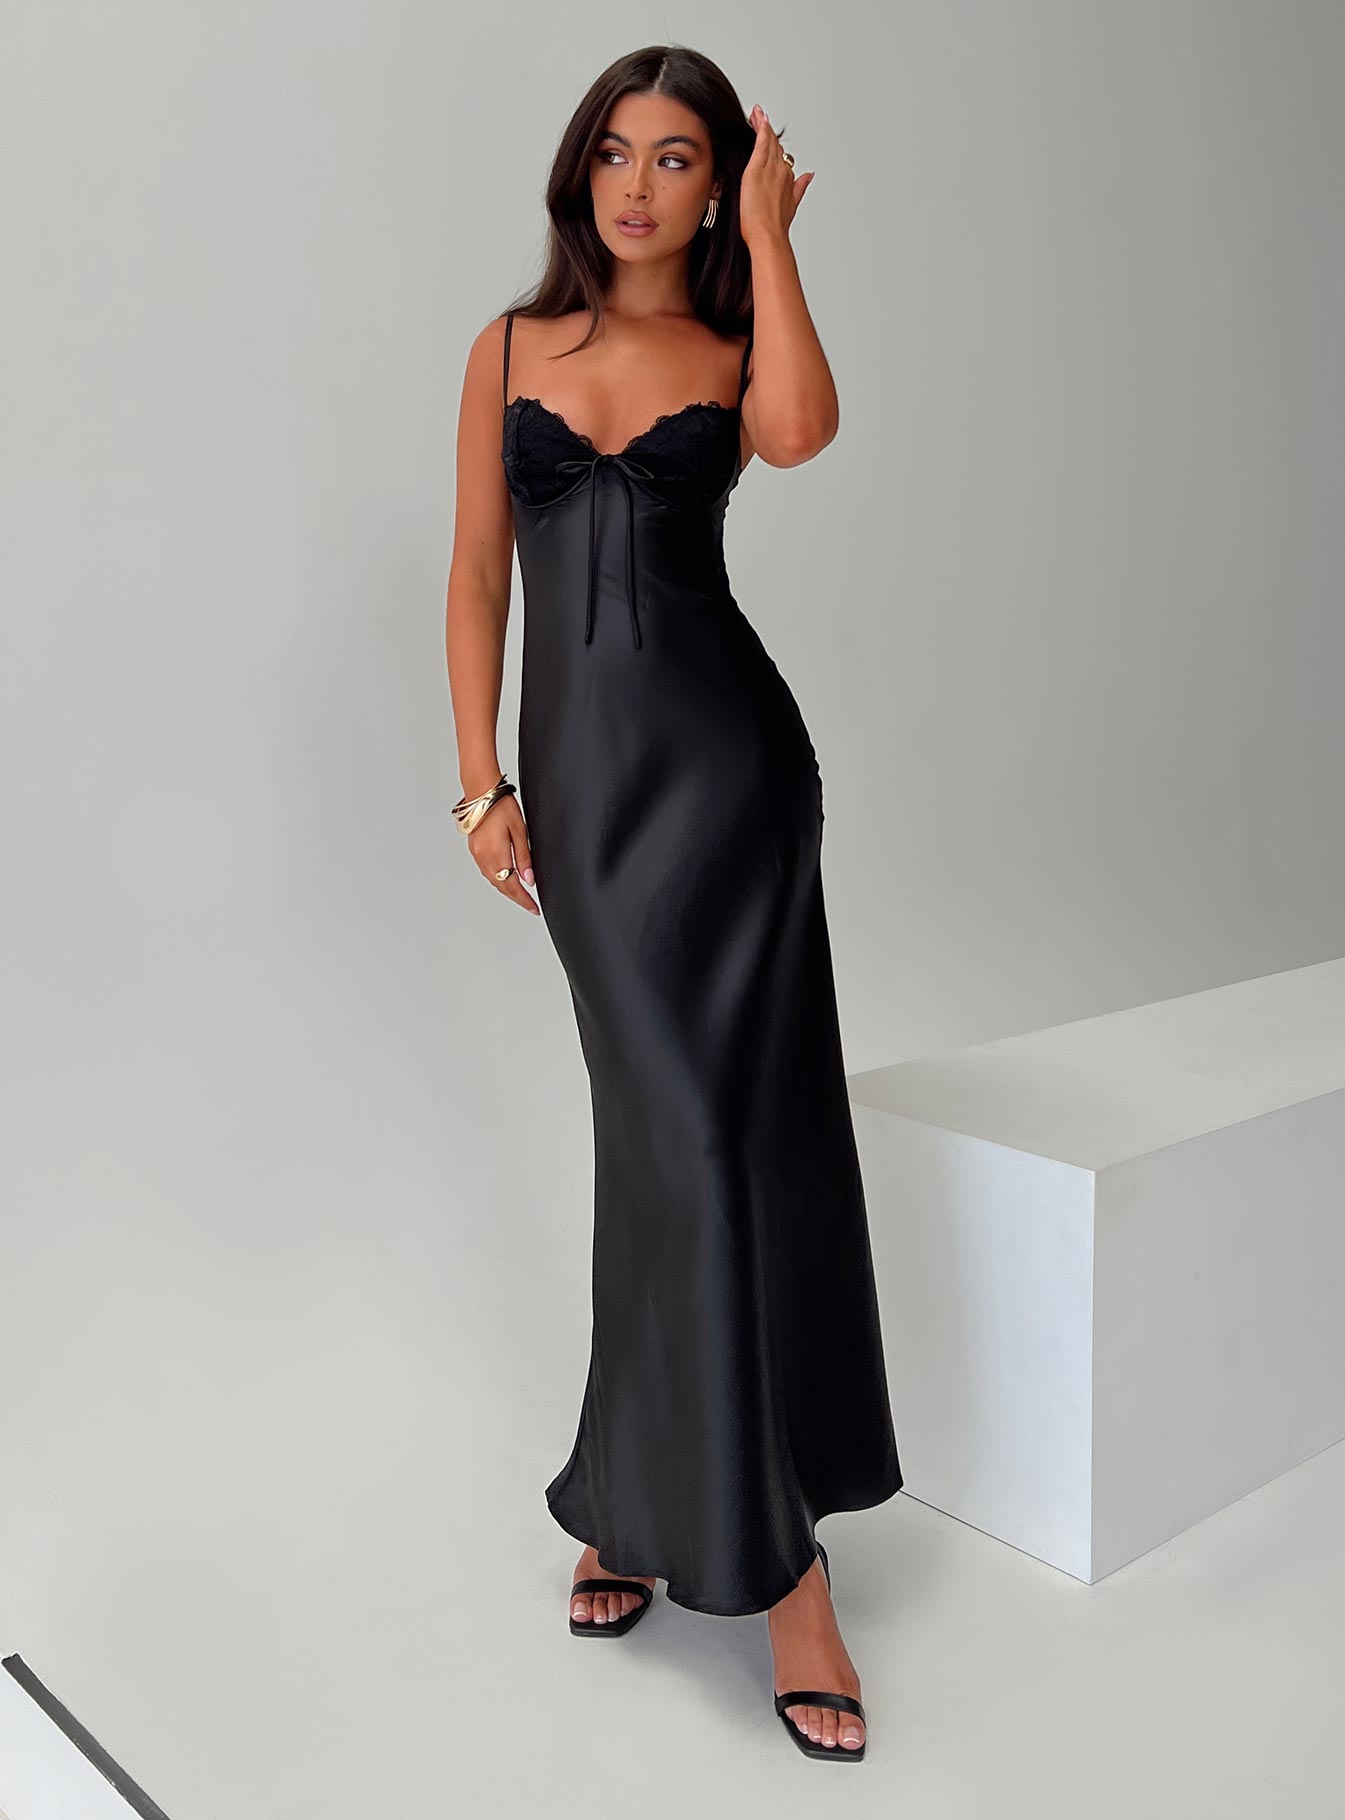 Shop Formal Dress - Fadyen Bias Cut Maxi Dress Black third image